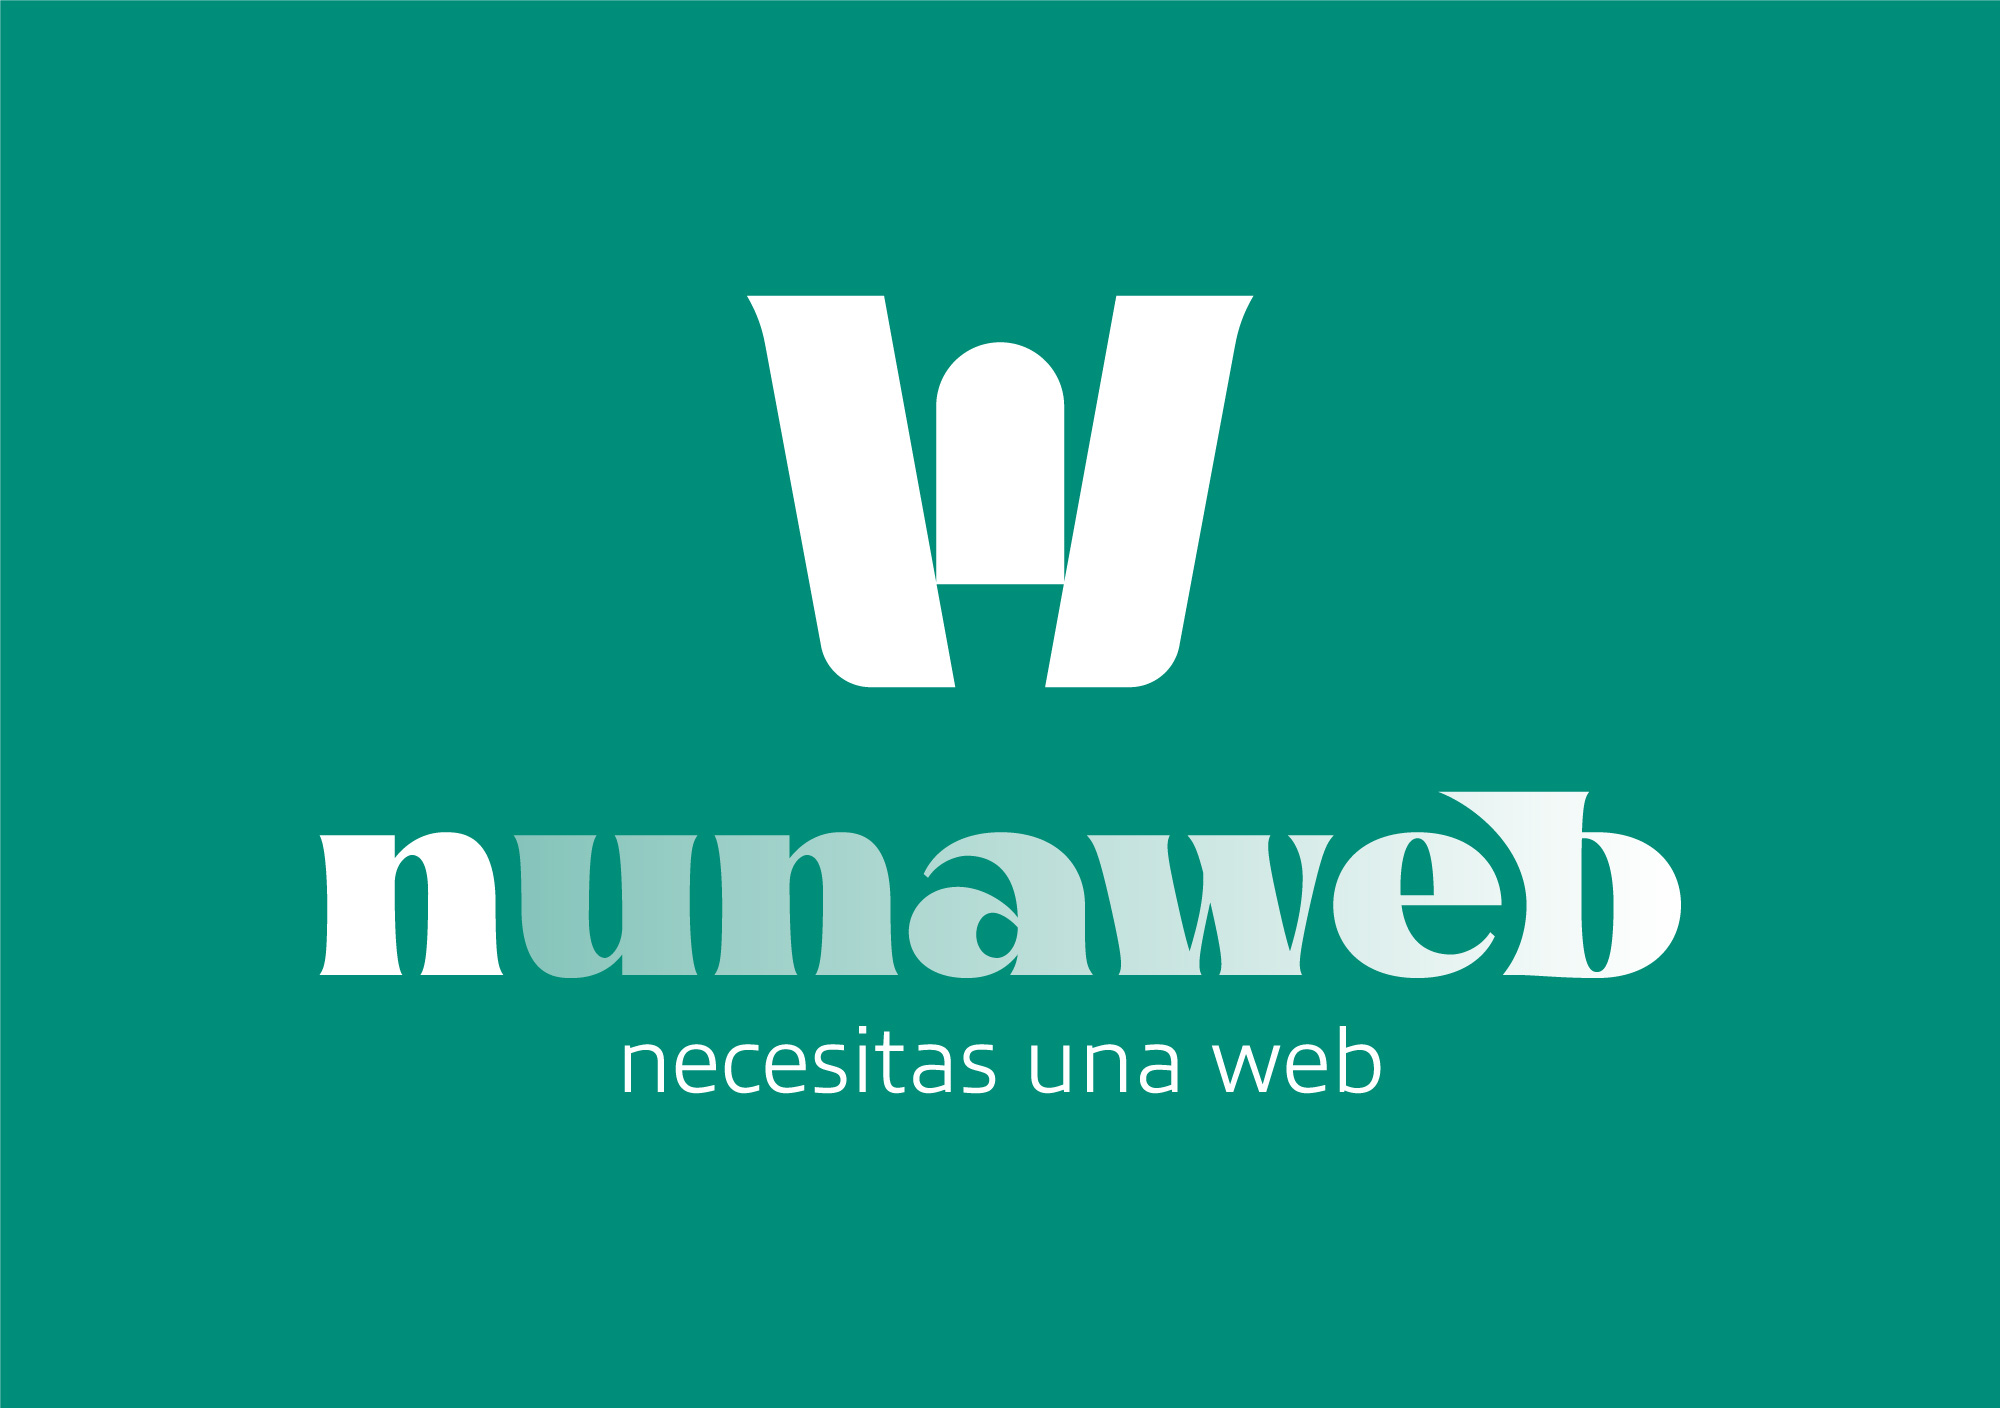 NUNAWEB logotipo vert verde